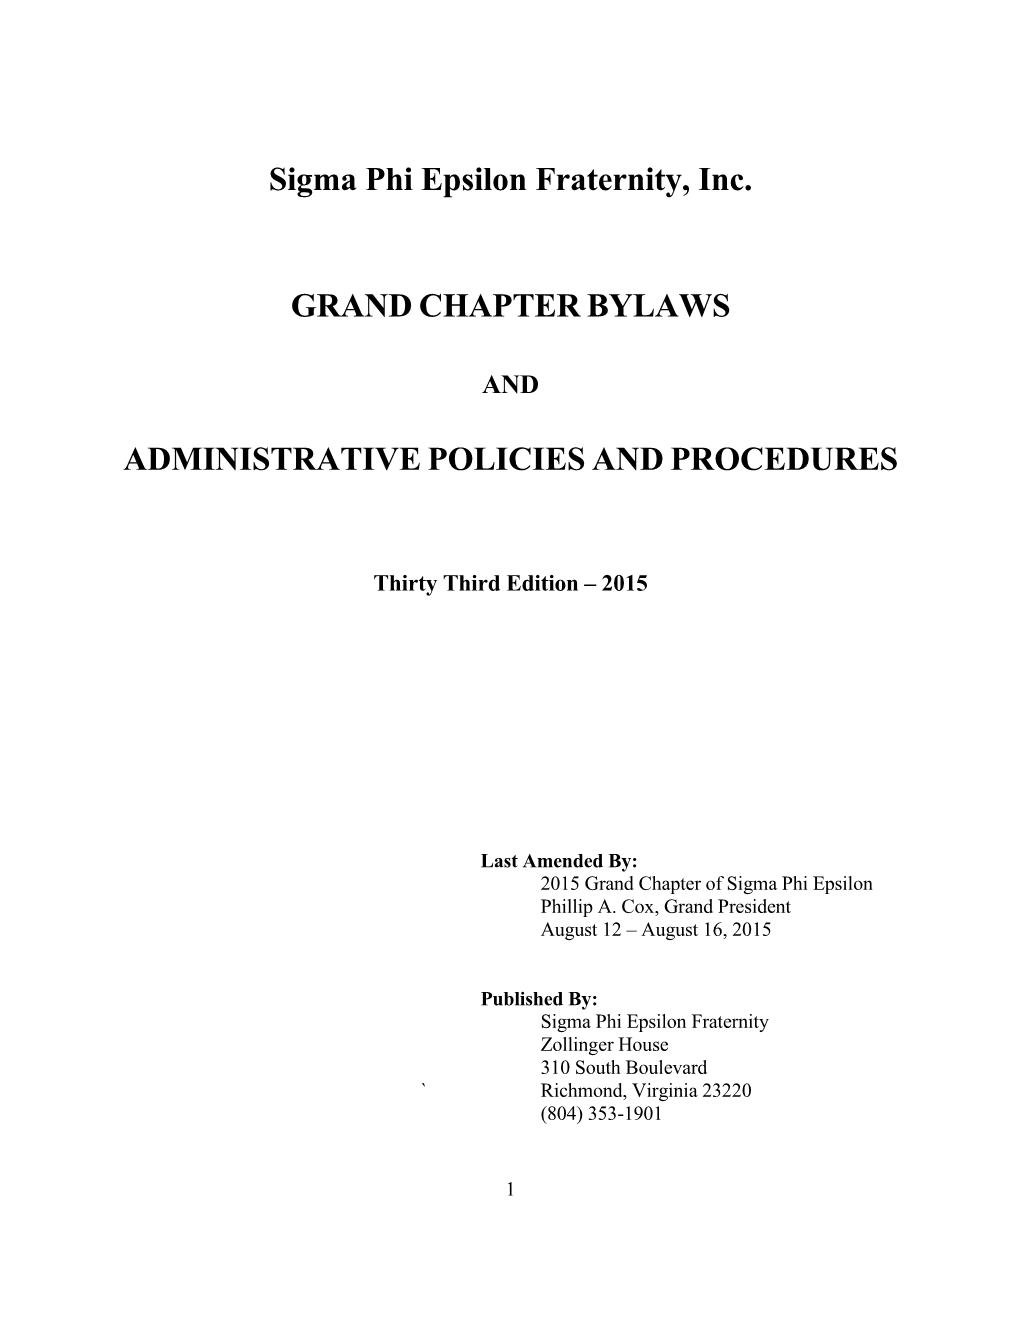 Sigma Phi Epsilon Fraternity, Inc. GRAND CHAPTER BYLAWS